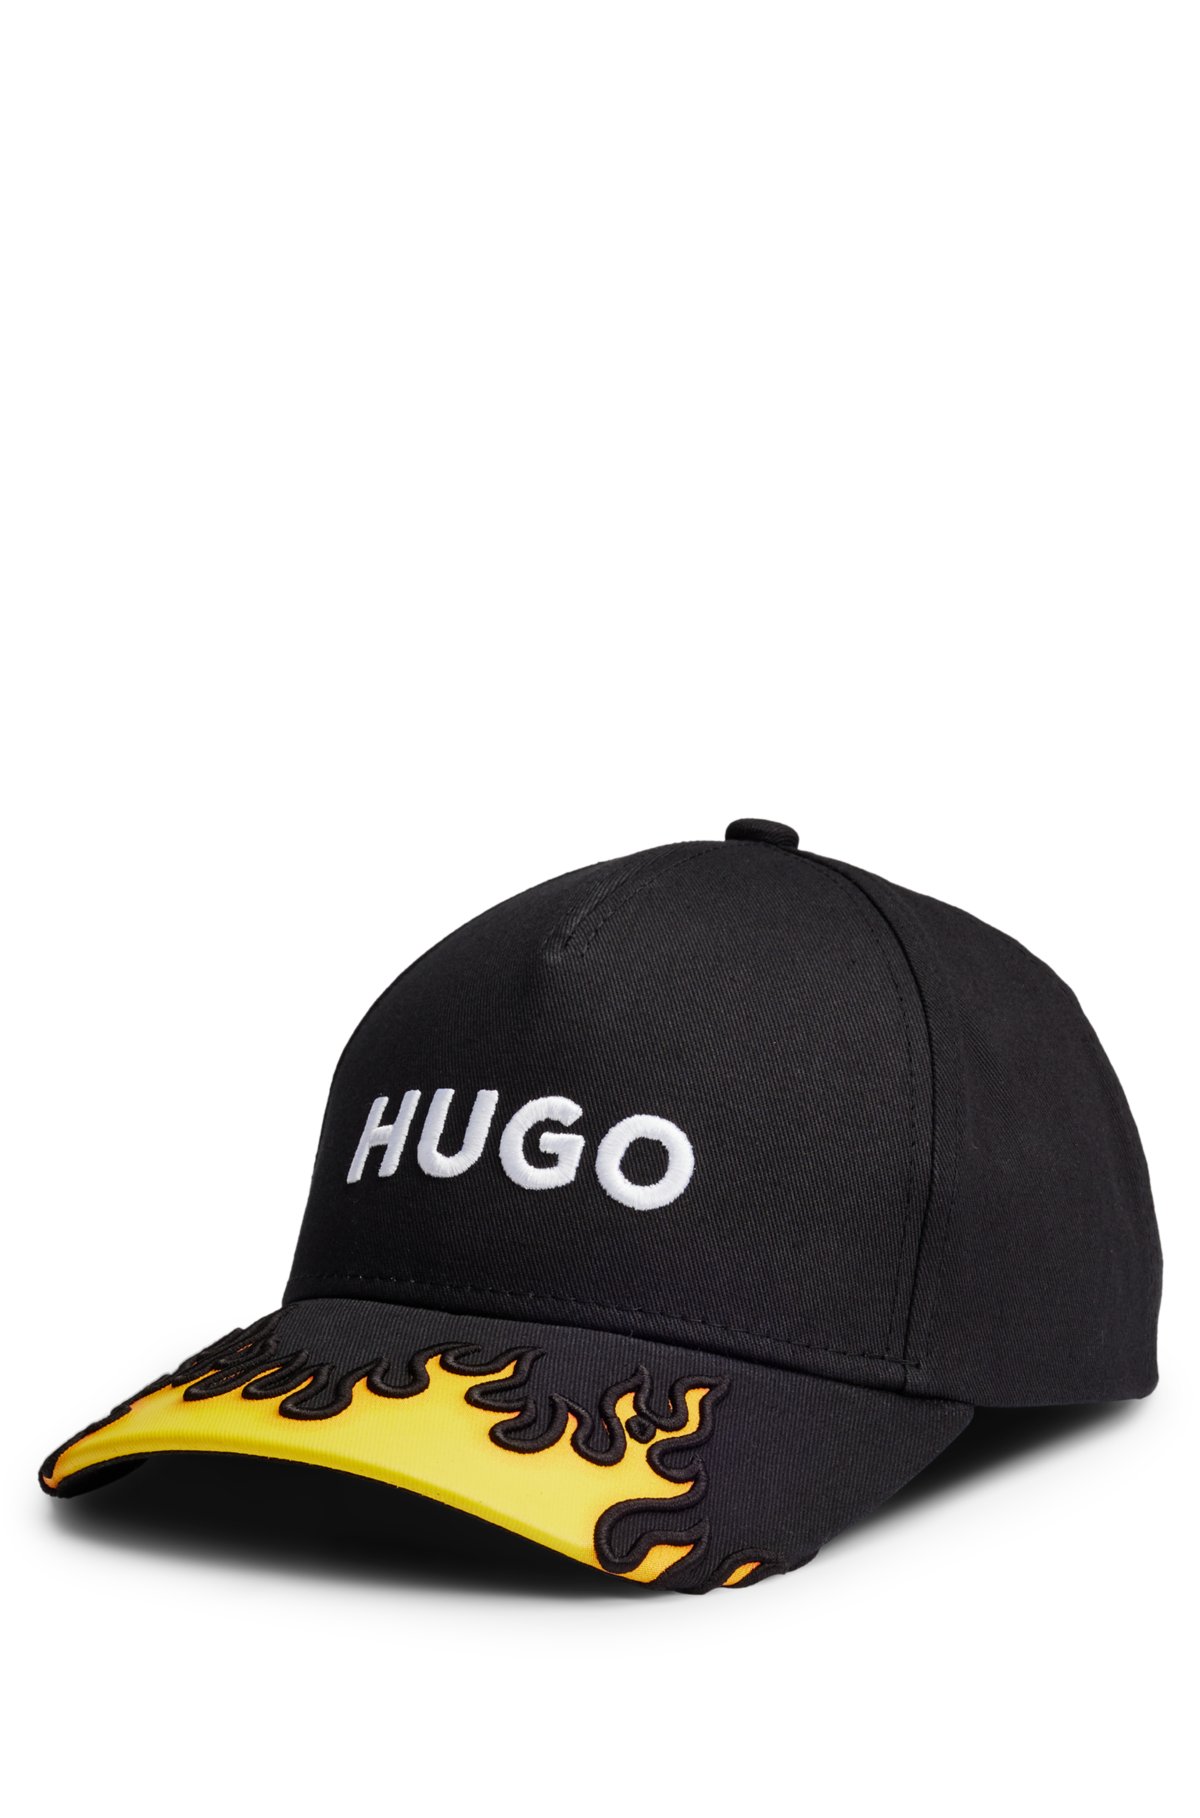 Caps in Black by HUGO BOSS